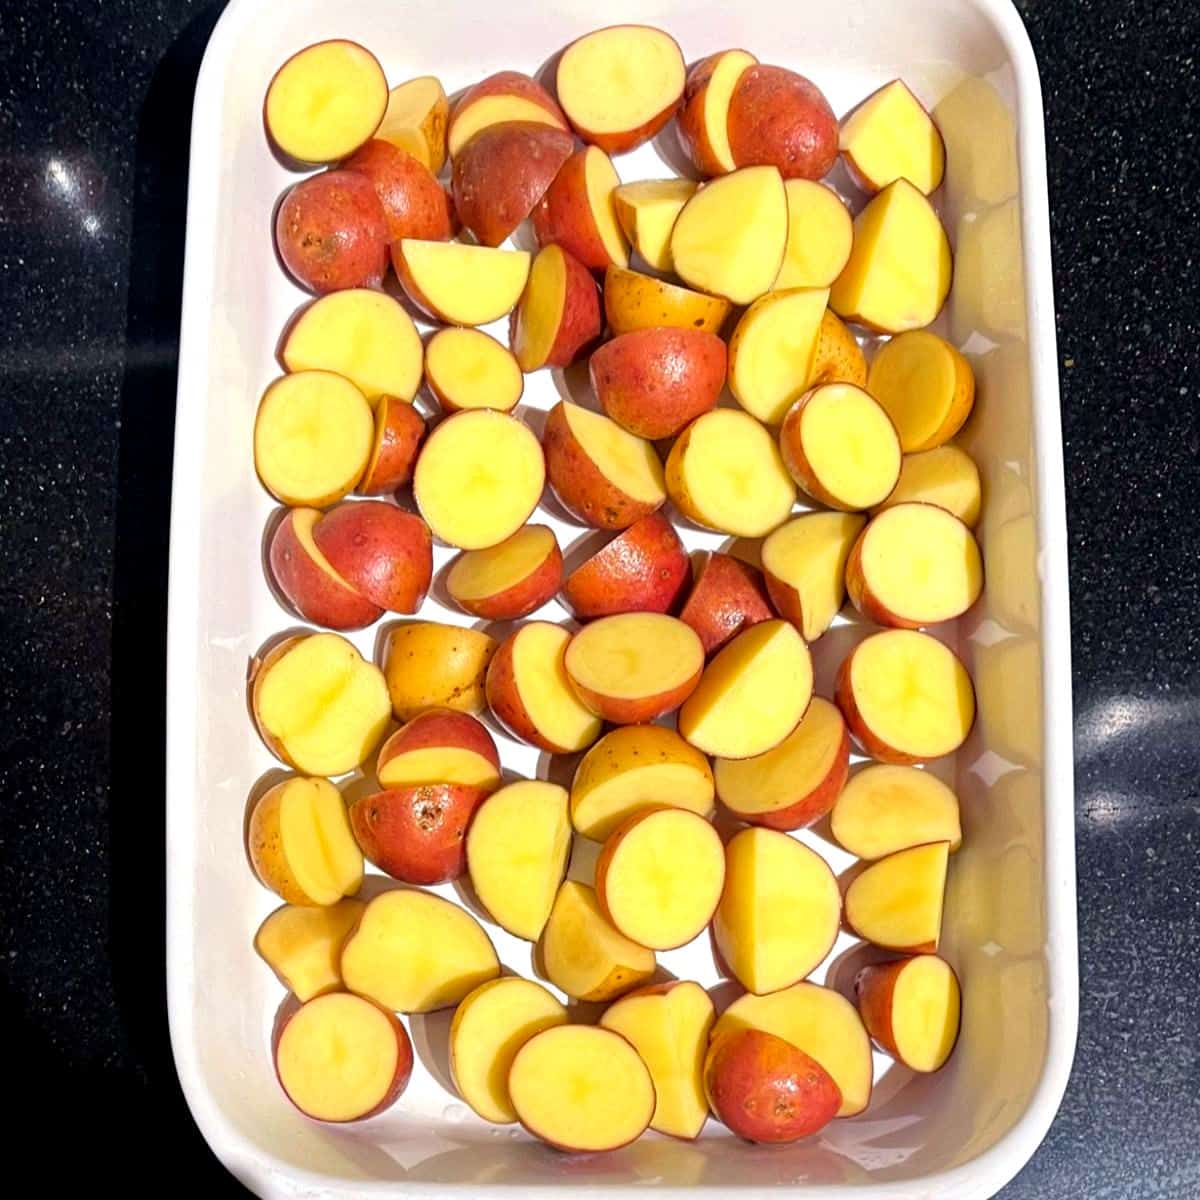 Raw potatoes arranged in single layer in baking dish.